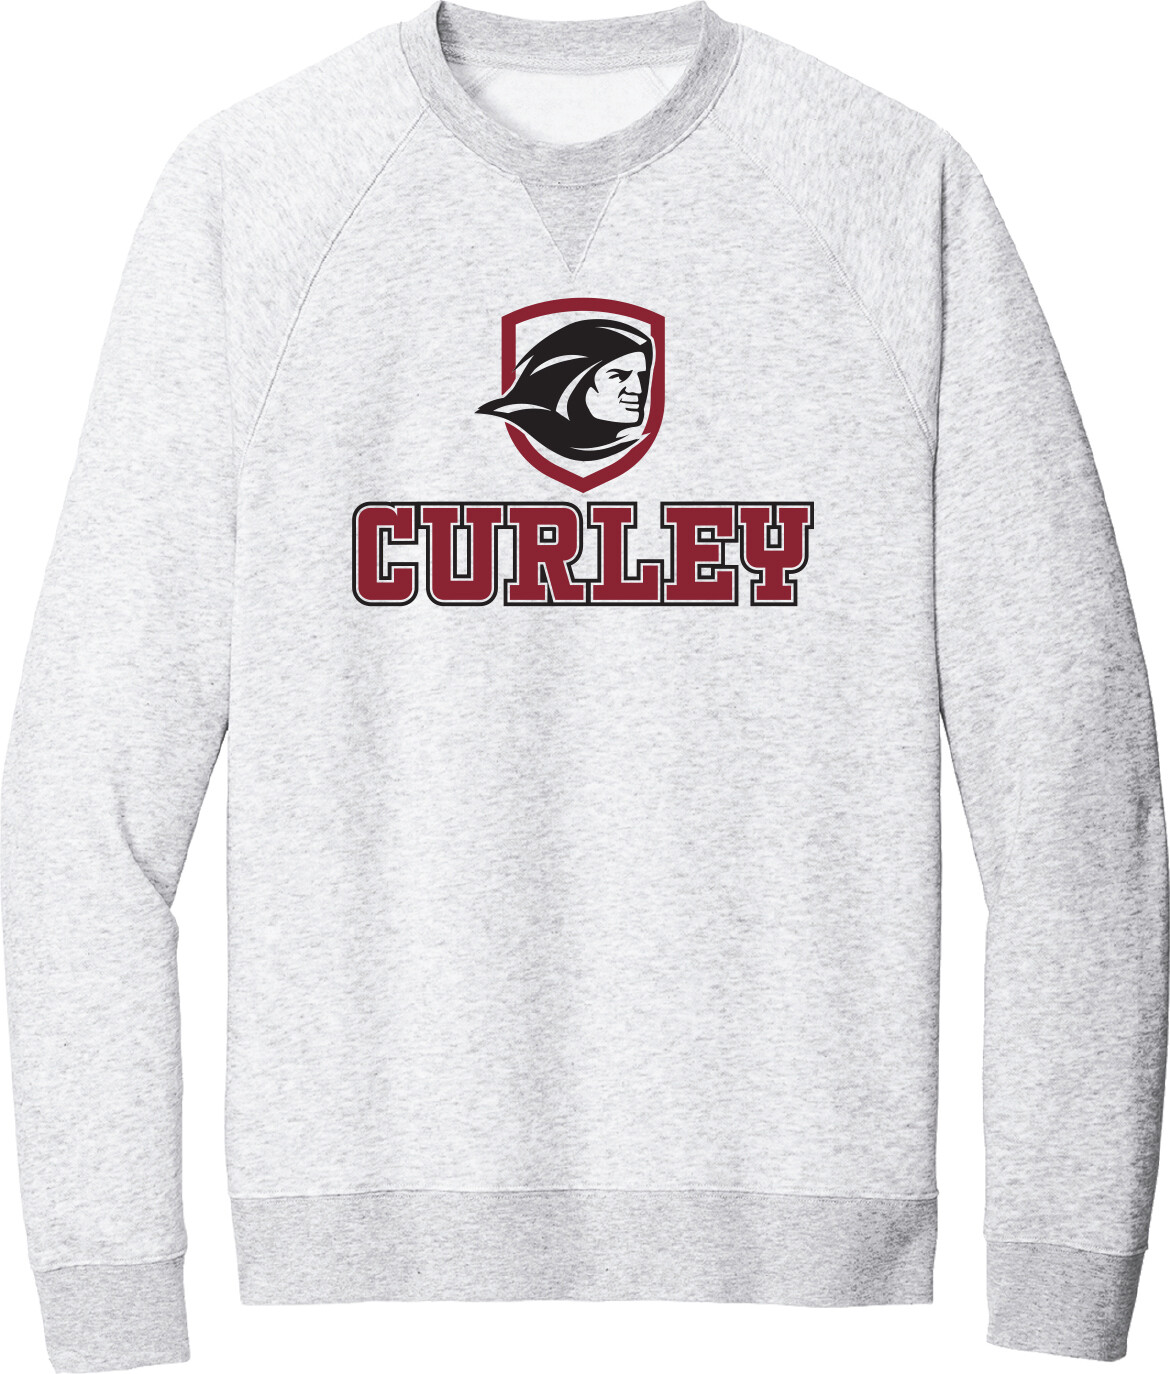 Curley New Logo Crew Neck Gray L